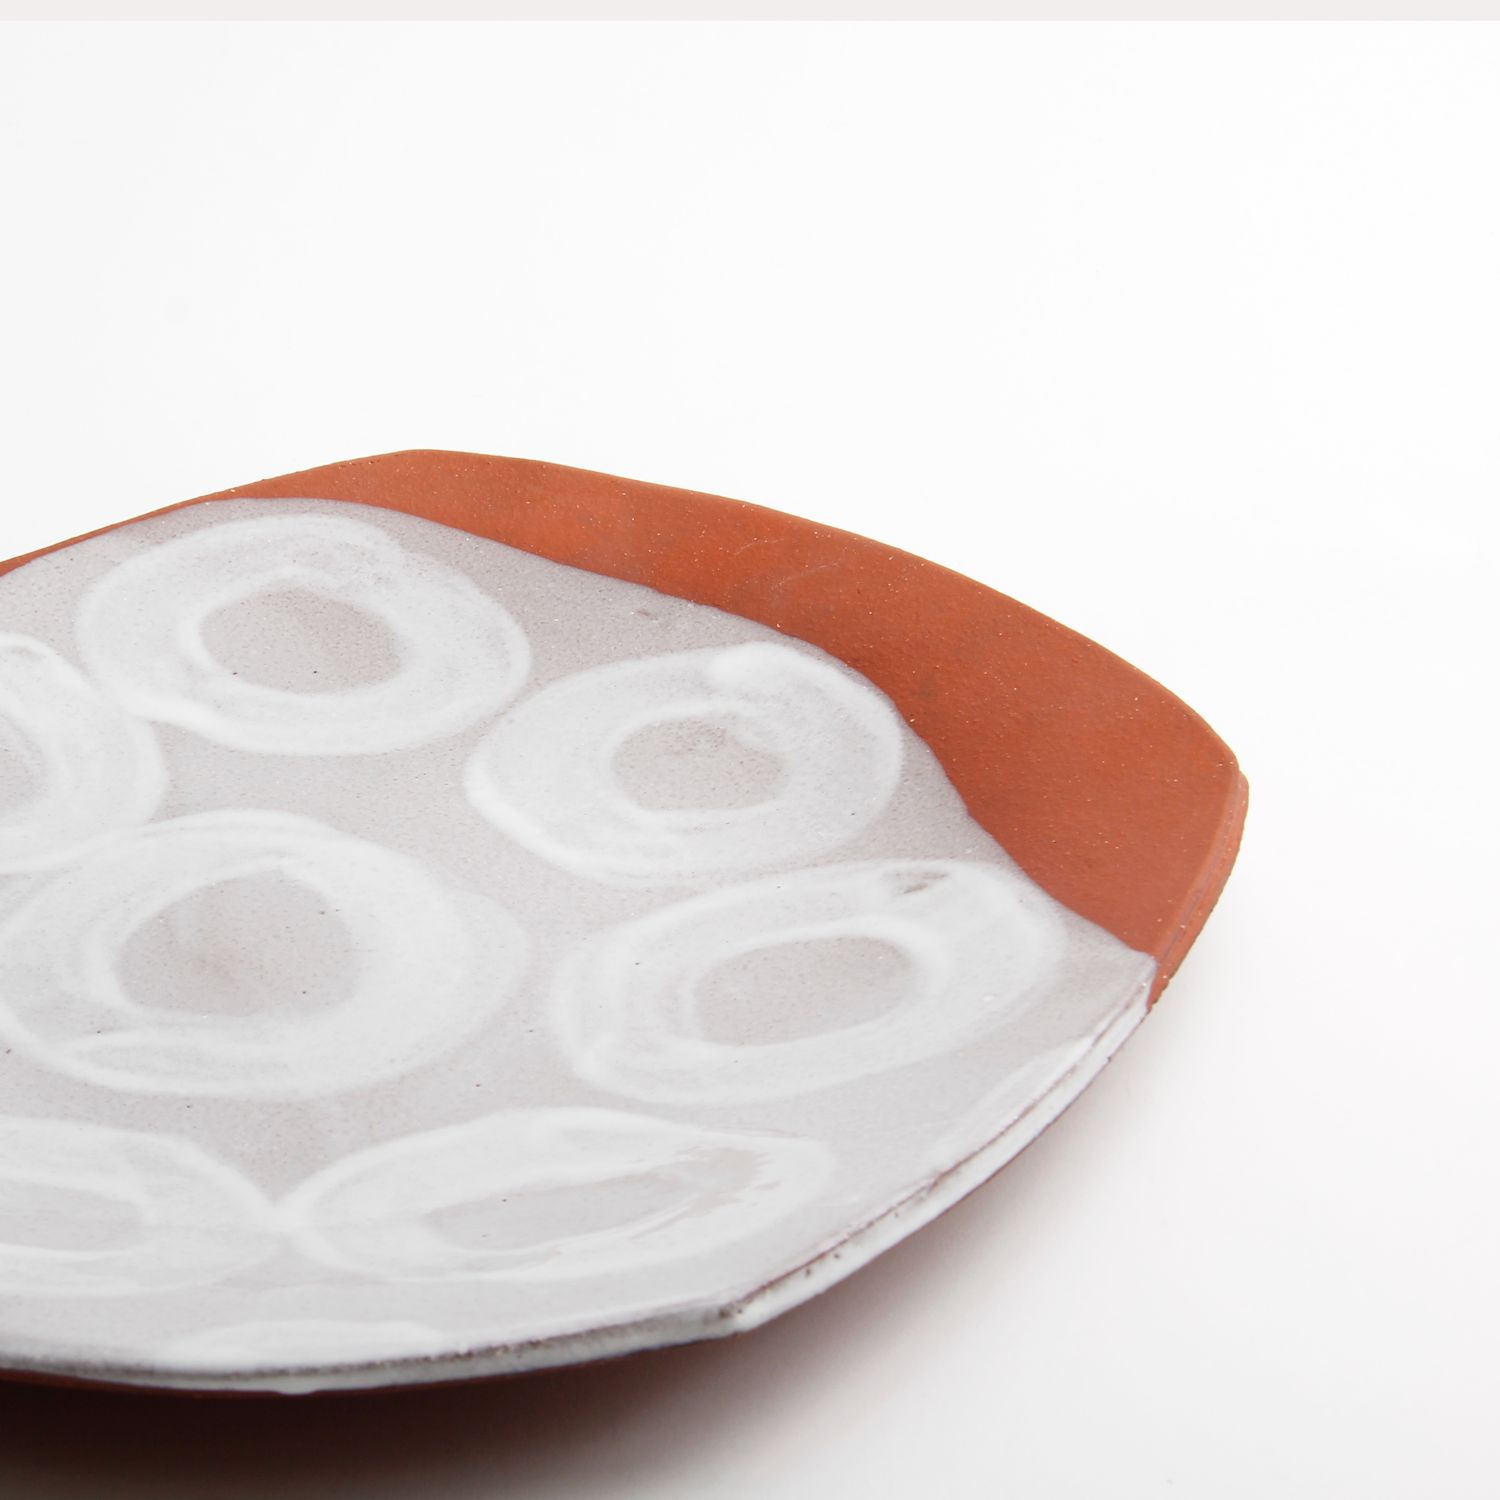 Mary McKenzie: Large White Circles Platter Product Image 2 of 2